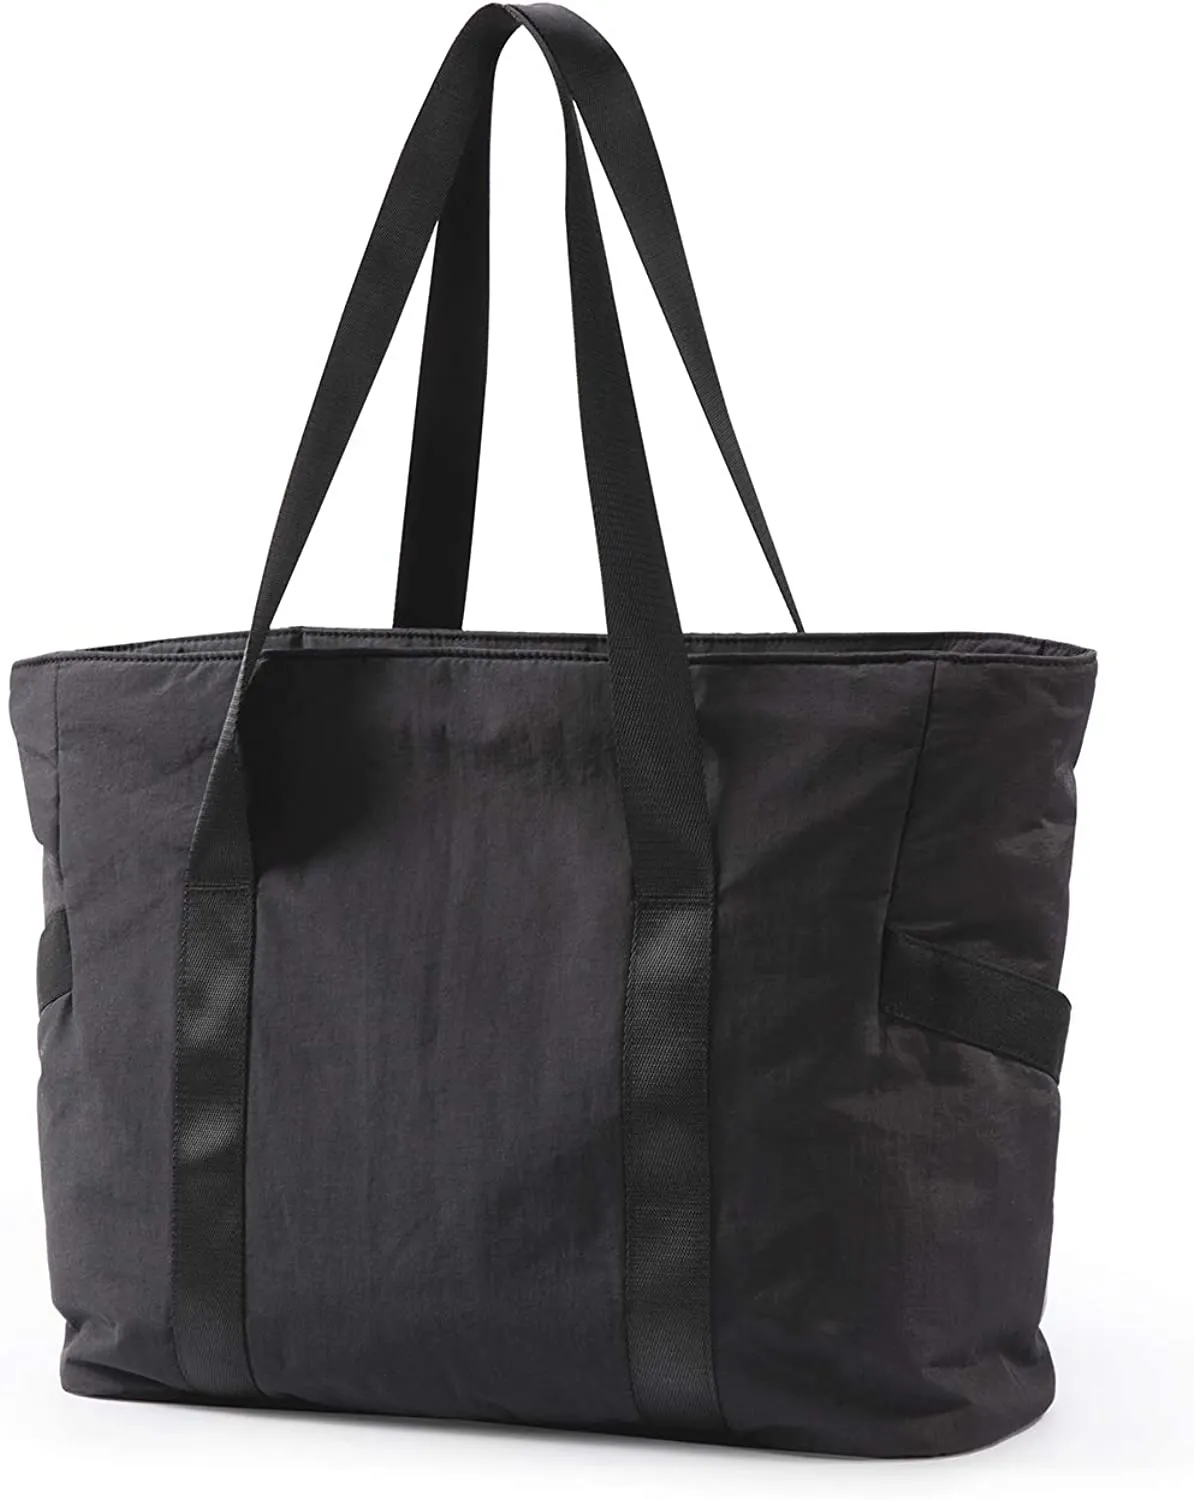 Large capacity casual sport bags shoulder bag top handle handbag with yoga mat buckle for Gym work school women tote bag